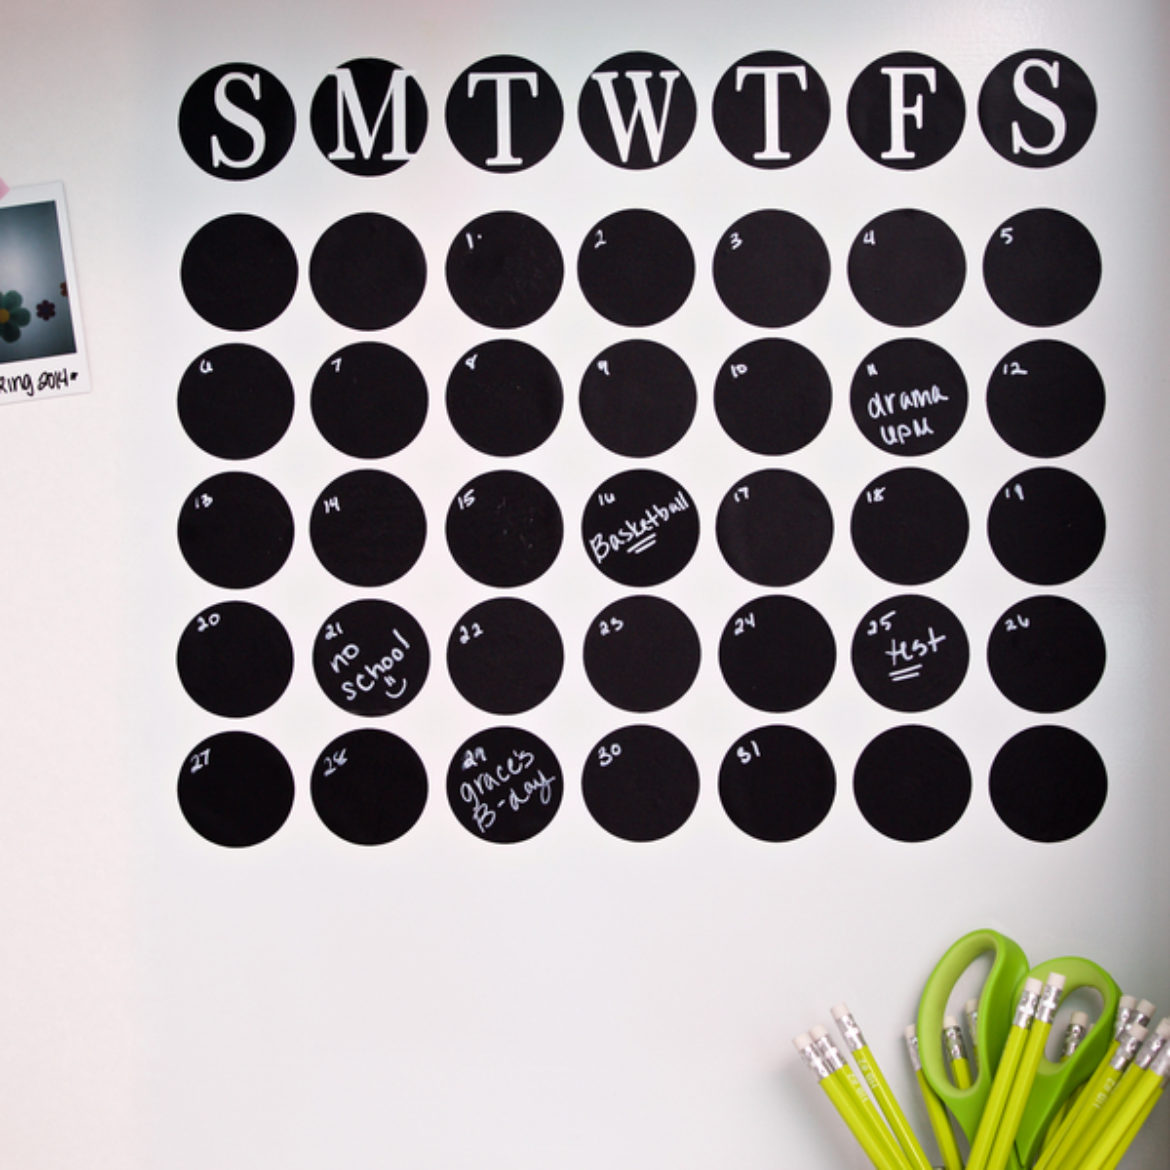 Completed Duck® Chalkboard Tape Calendar